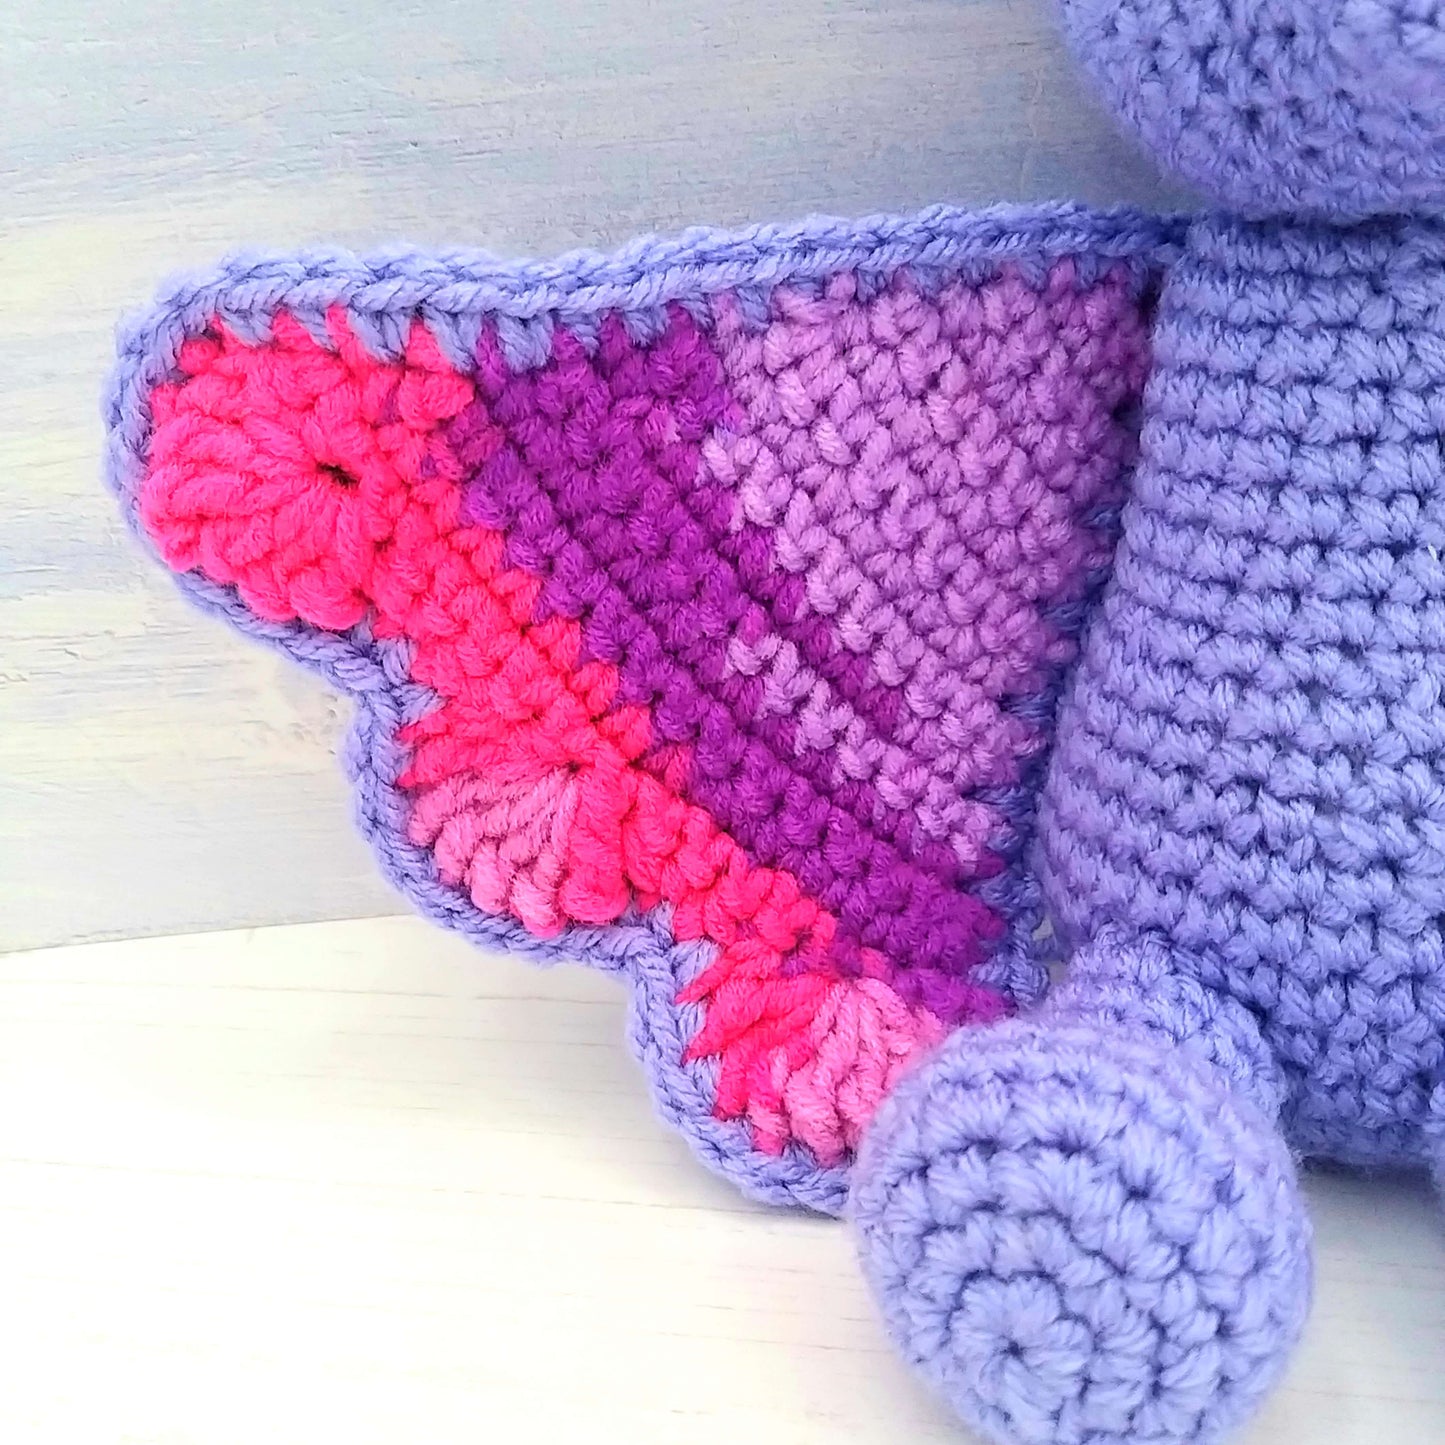 Bella Boo the Bat - PDF Crochet Pattern